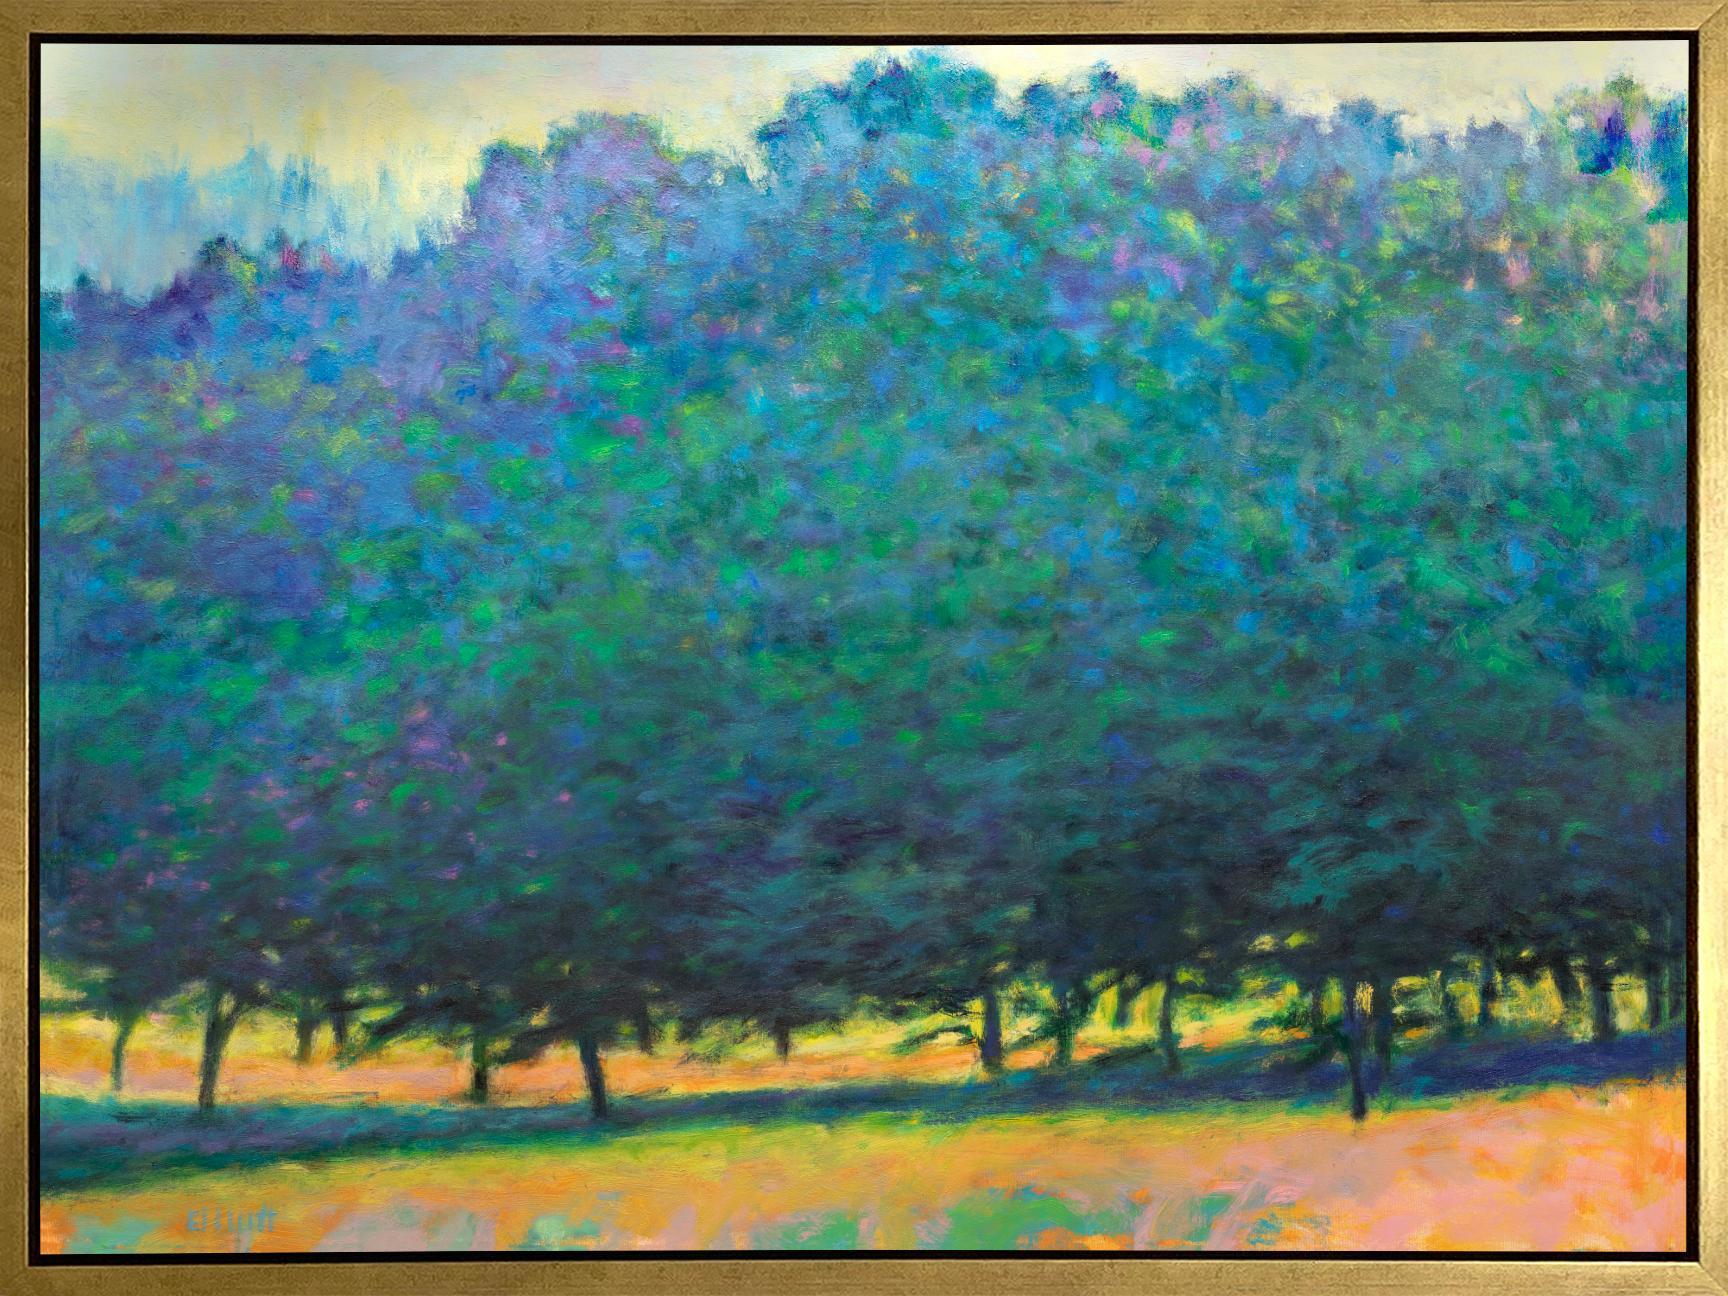 Ken Elliott Landscape Print - "Greens Moving Across, " Framed Limited Edition Giclee Print, 30" x 40"